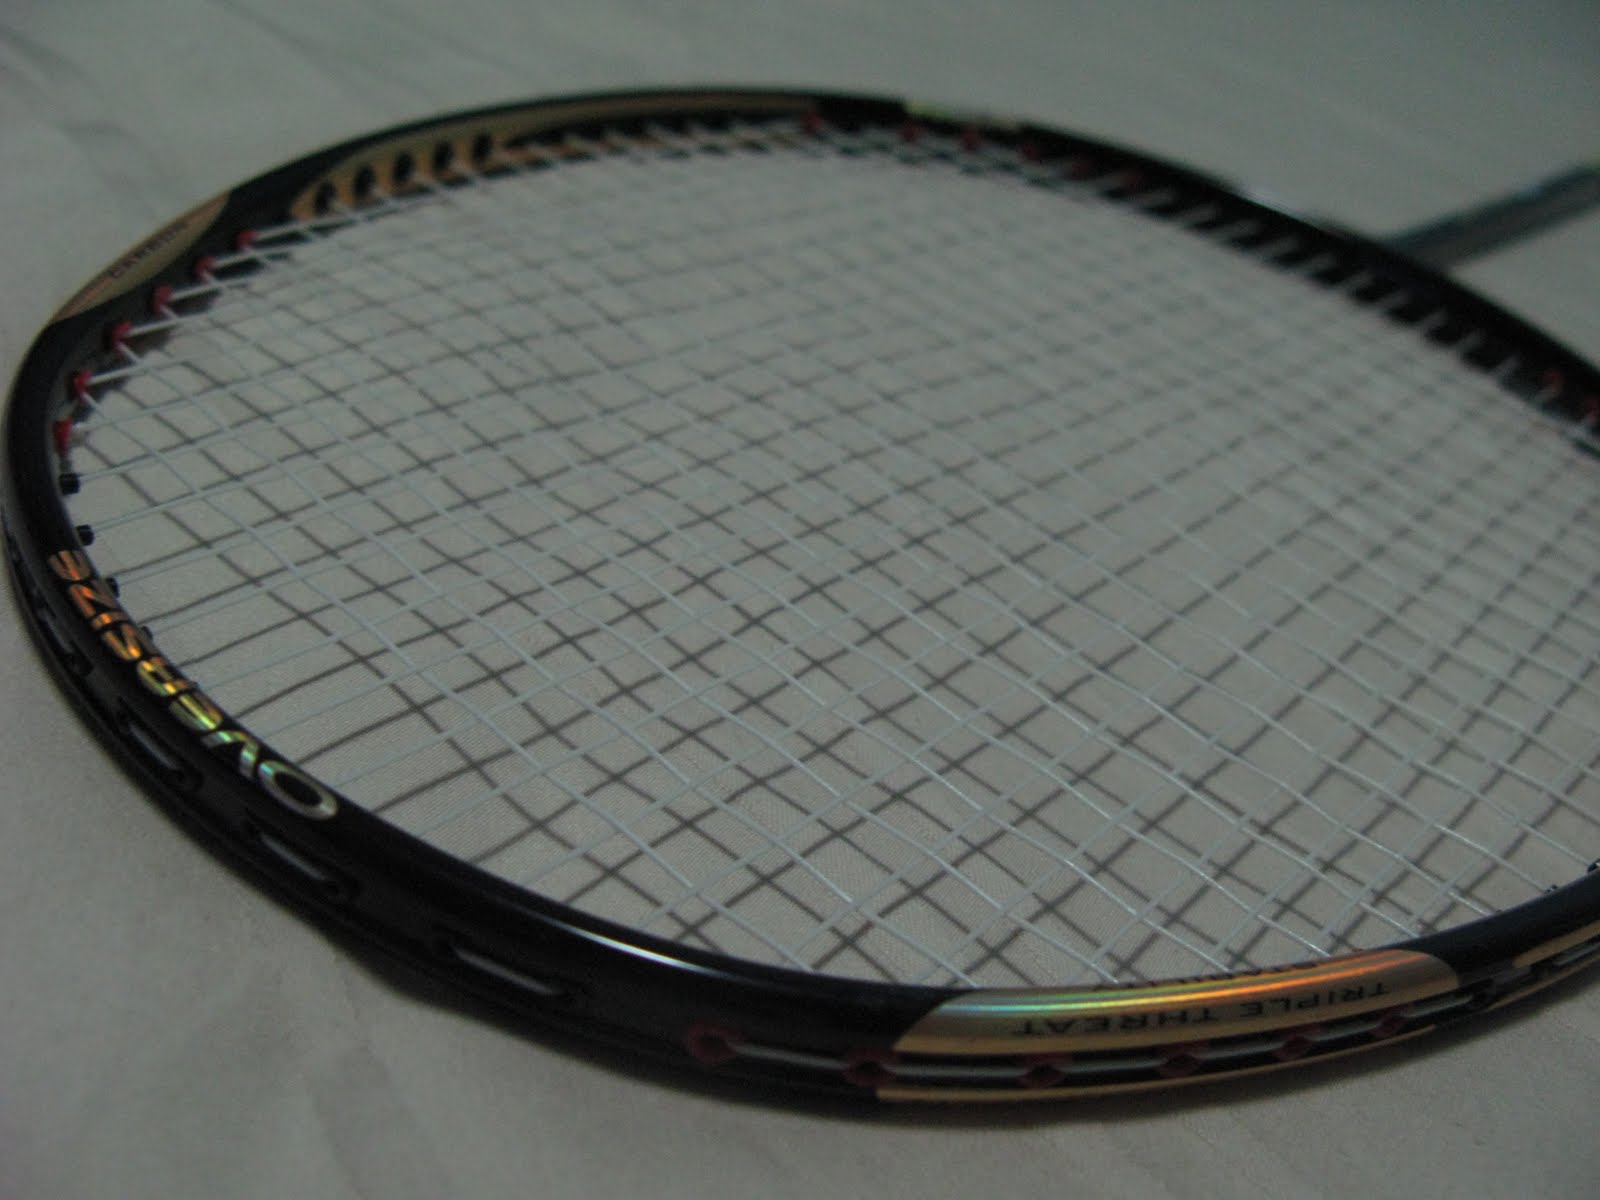 Of badminton things: Badminton Racket Review: Prince Oversize Black